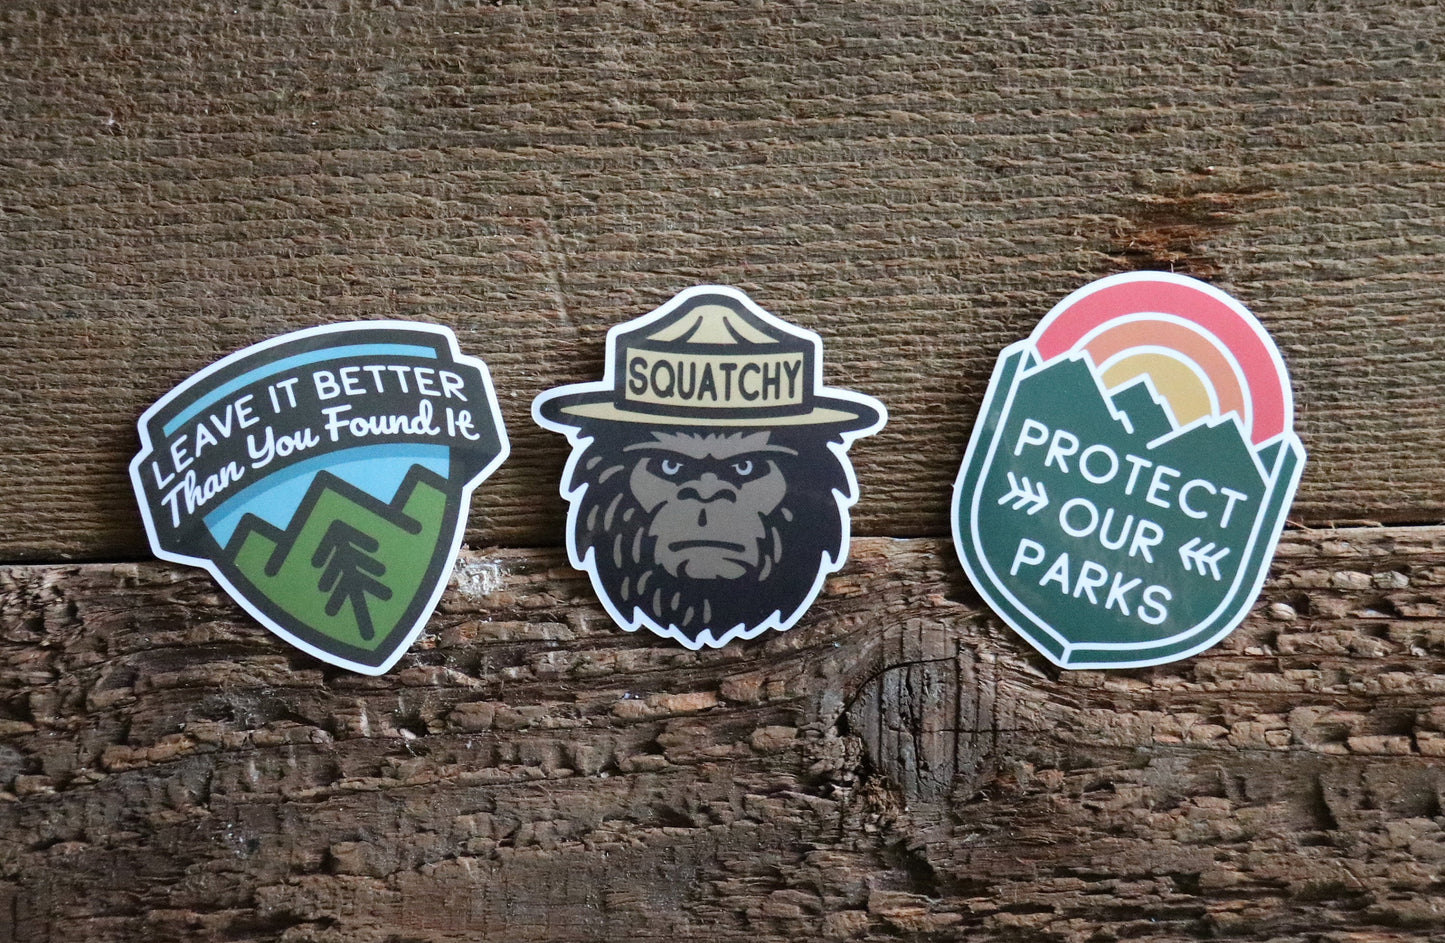 Squatchy Bigfoot Sticker